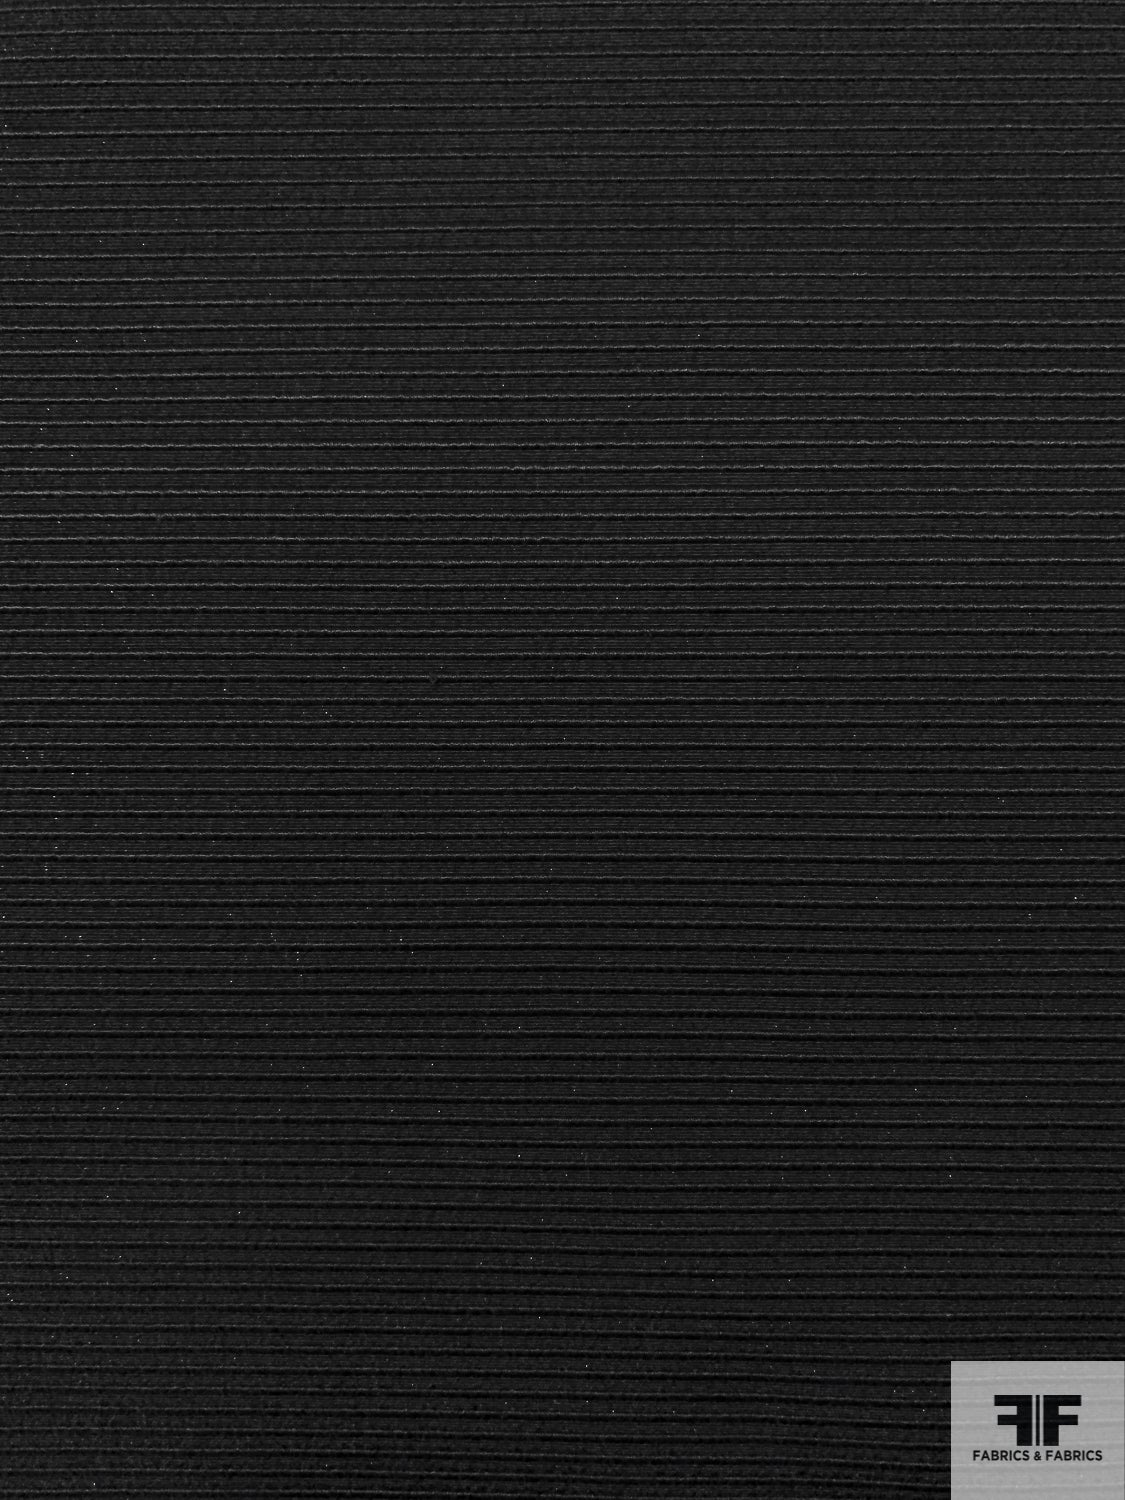 Horizontal Ottoman Striped Brocade with Lurex - Black